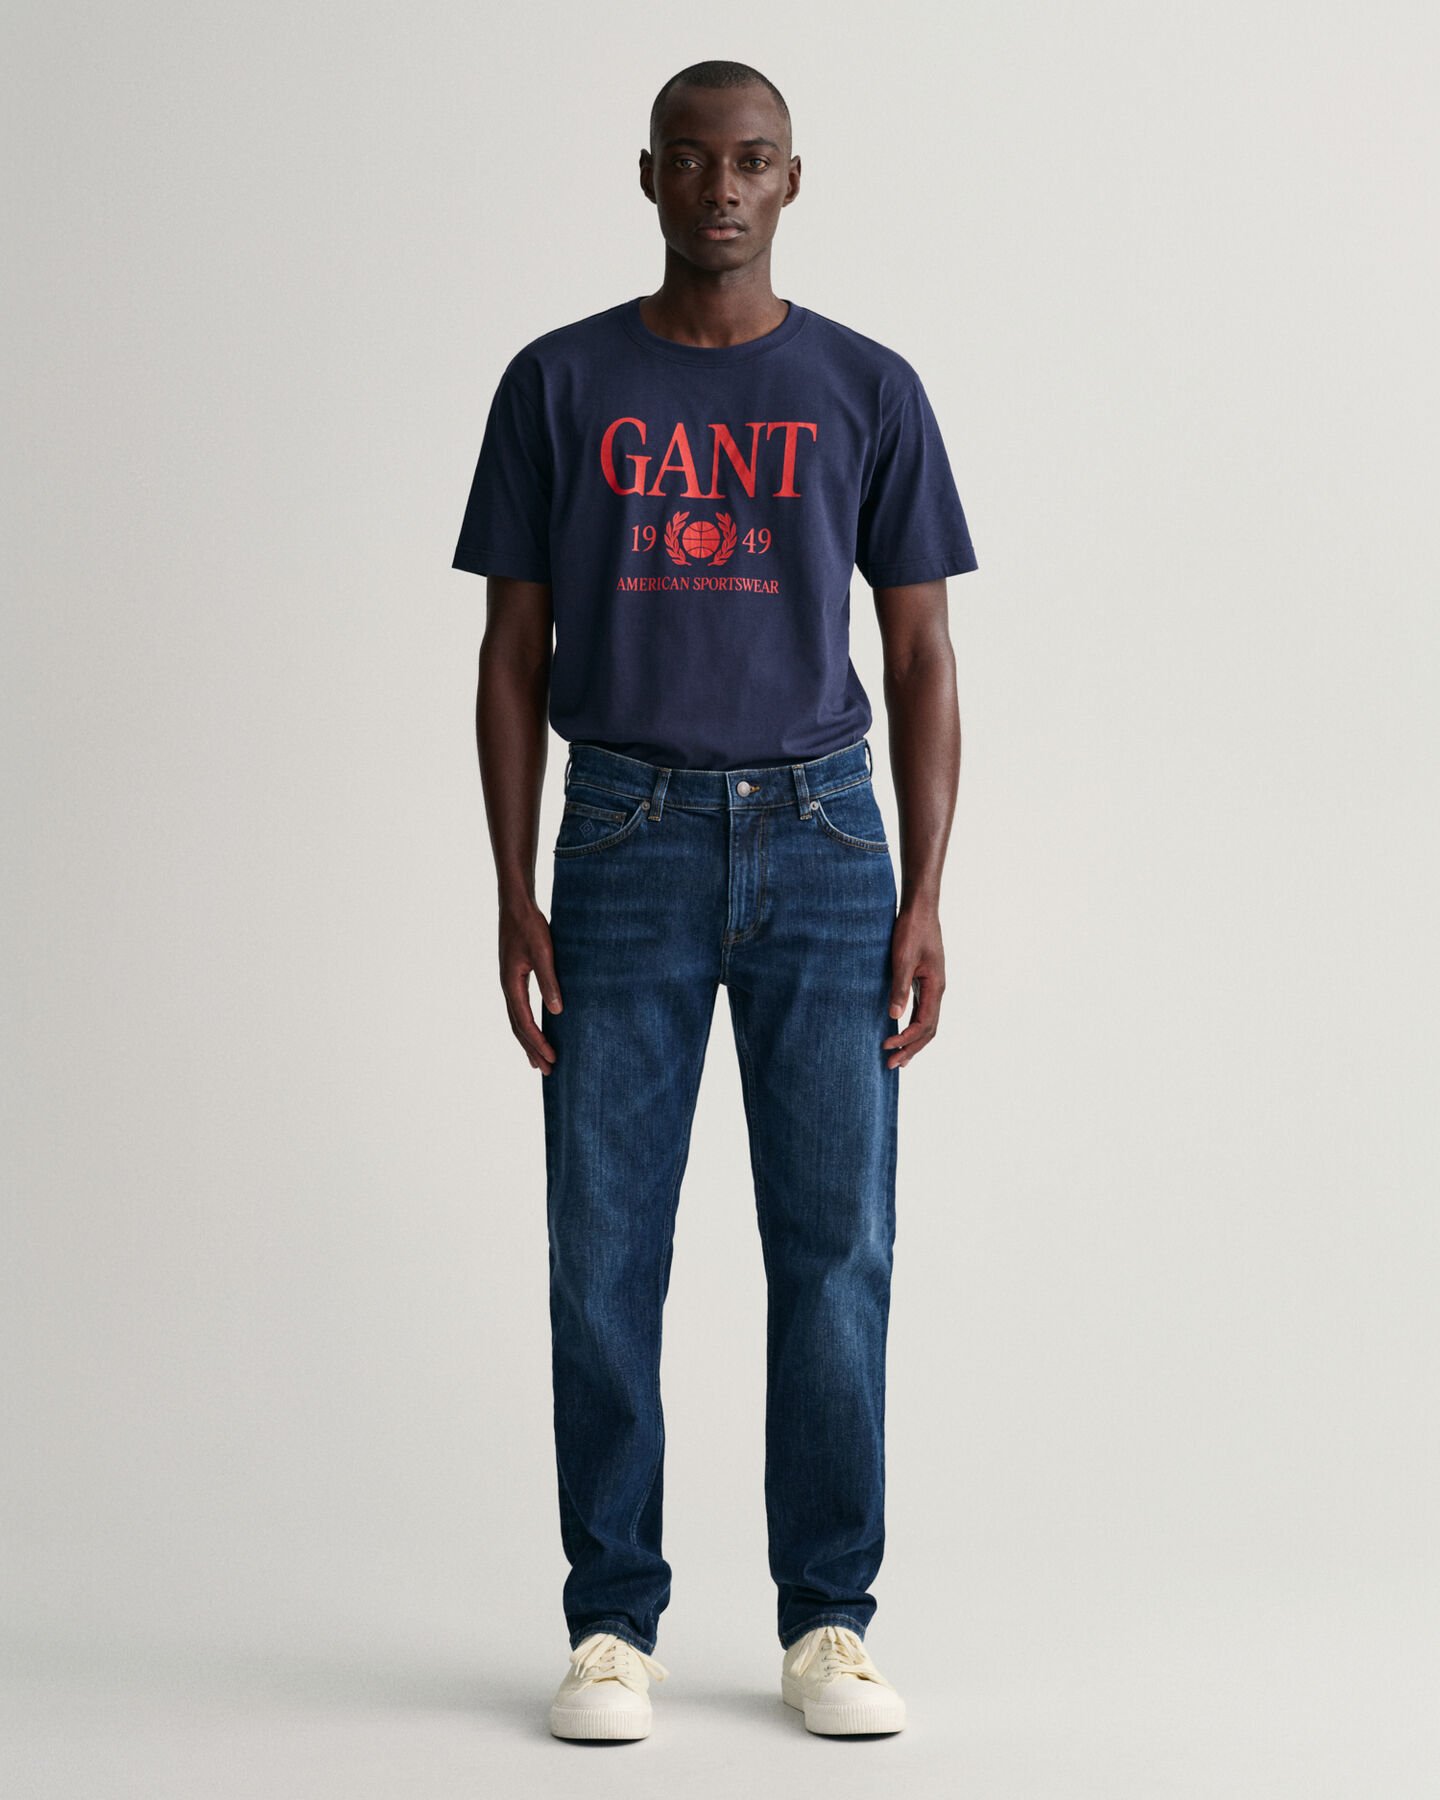 Arley jeans - GANT